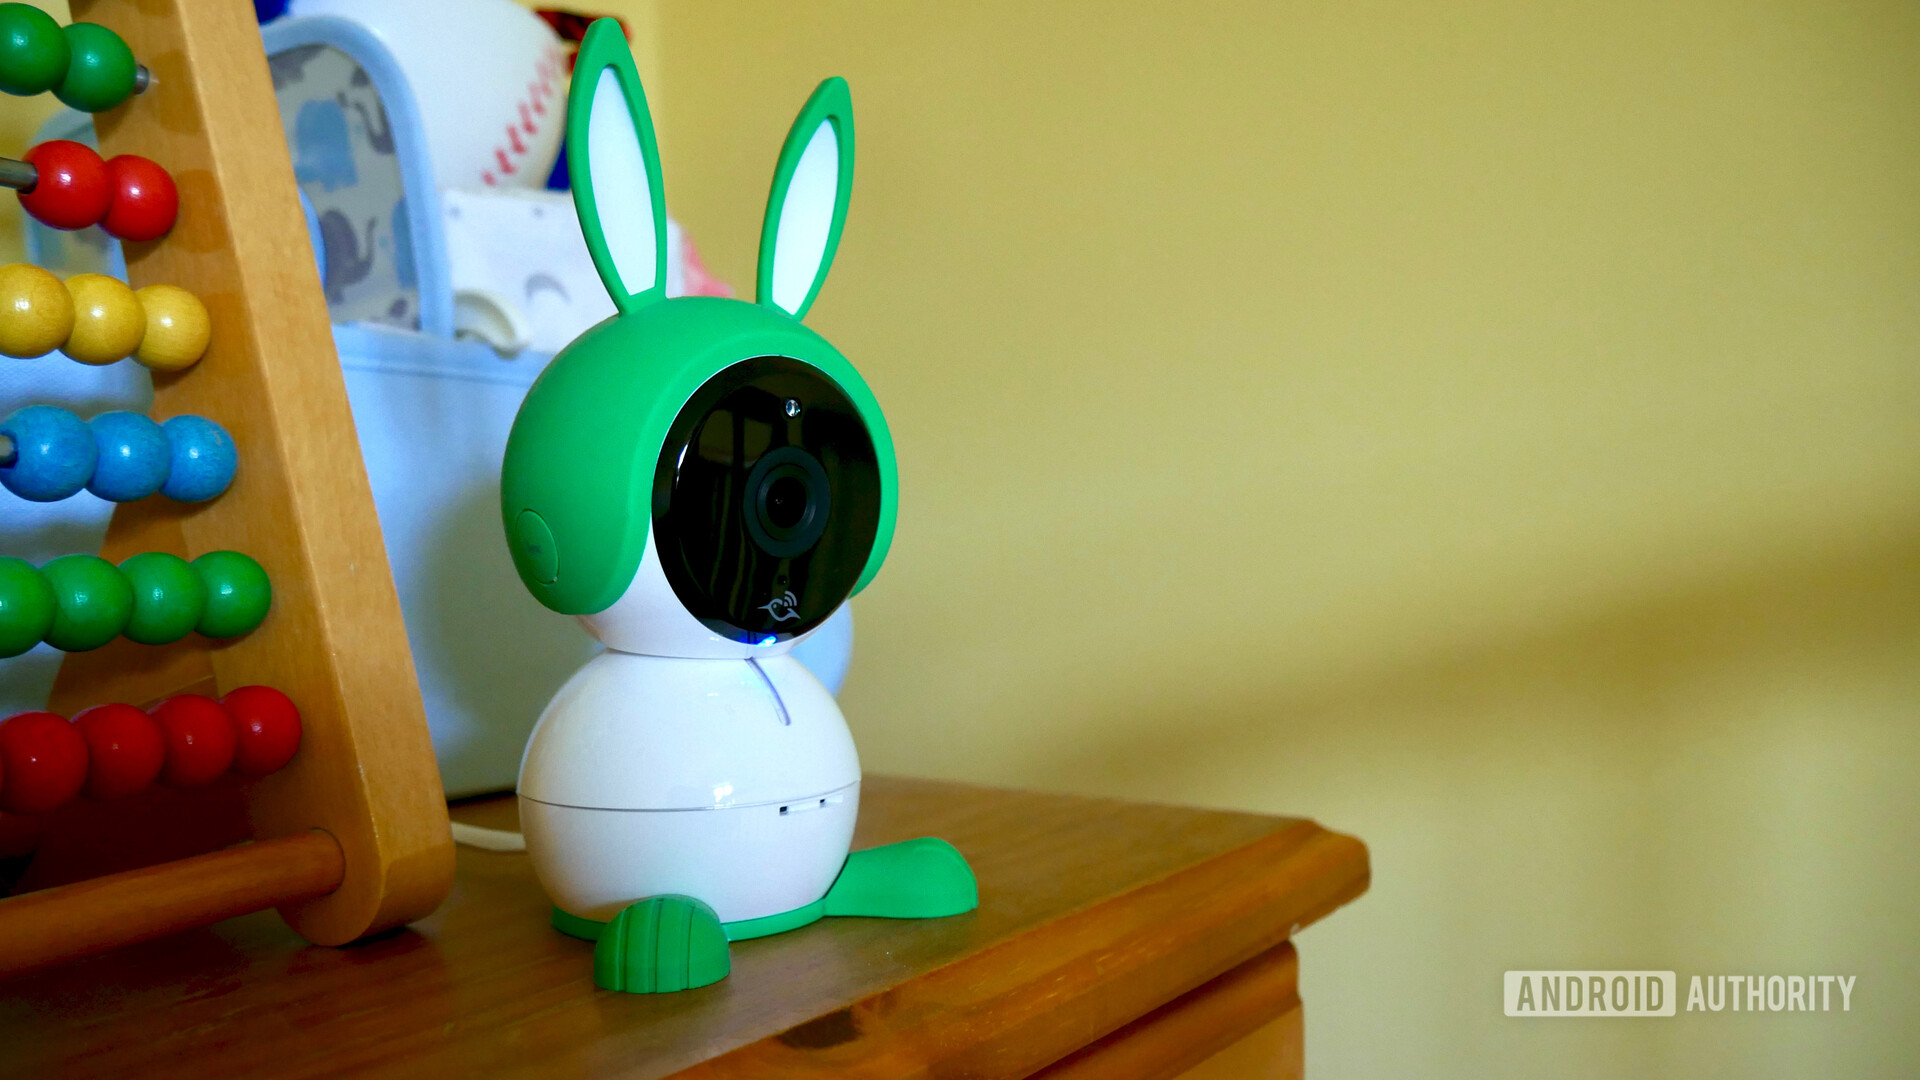 The Arlo Baby security camera